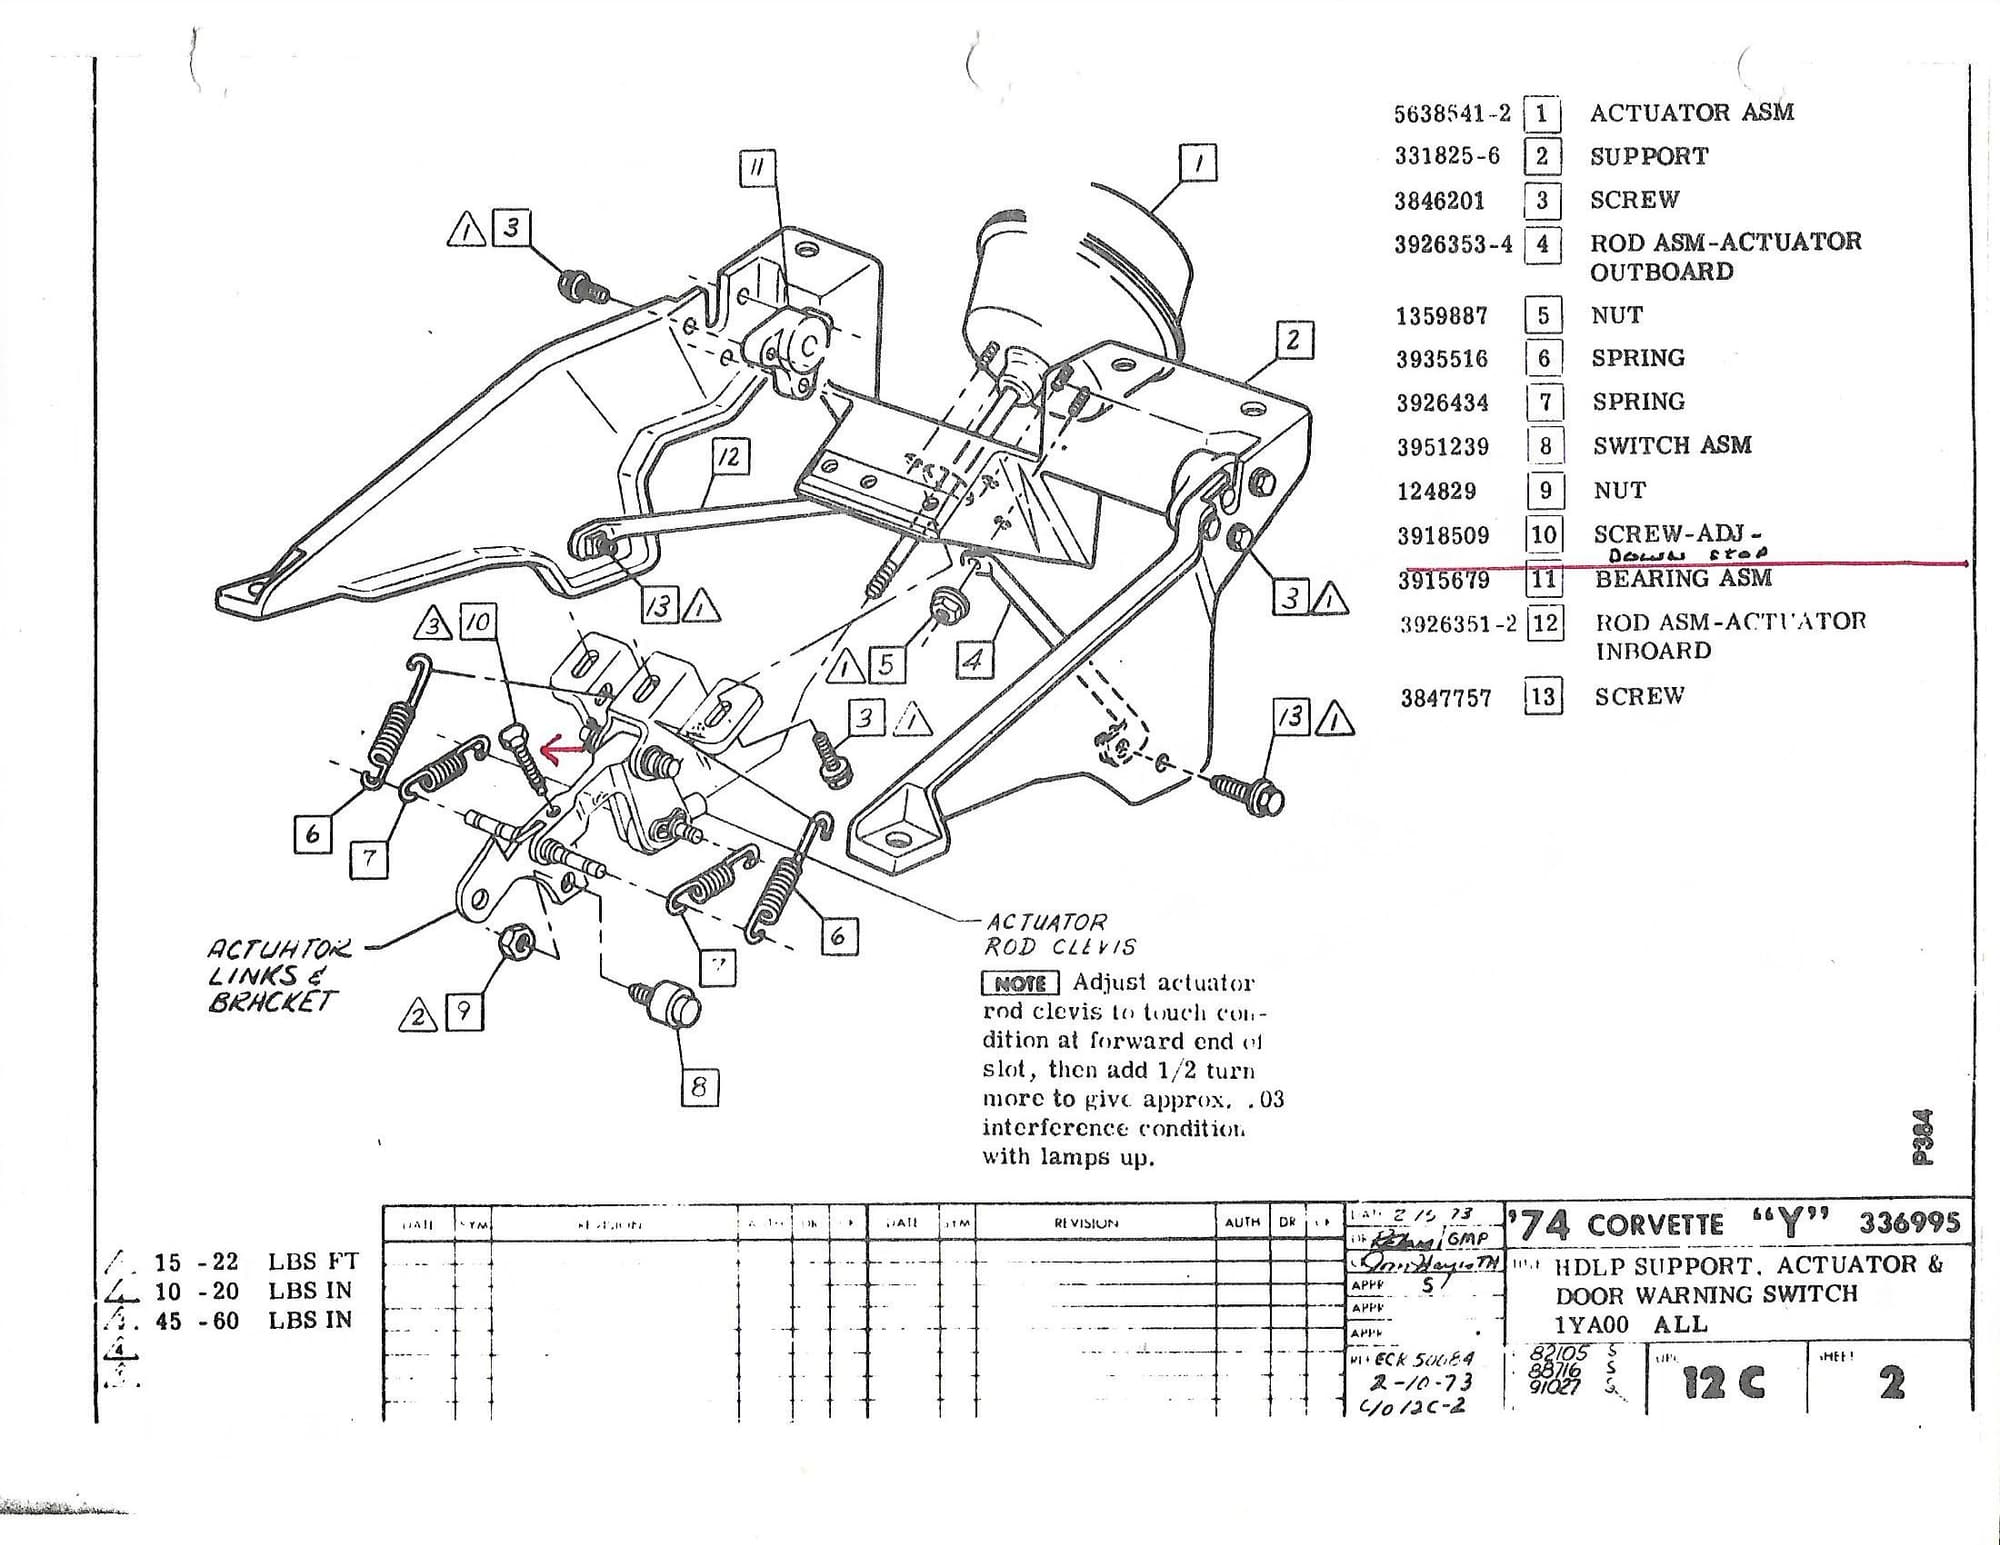 ‘73 dash & headlight wiring questions - CorvetteForum - Chevrolet